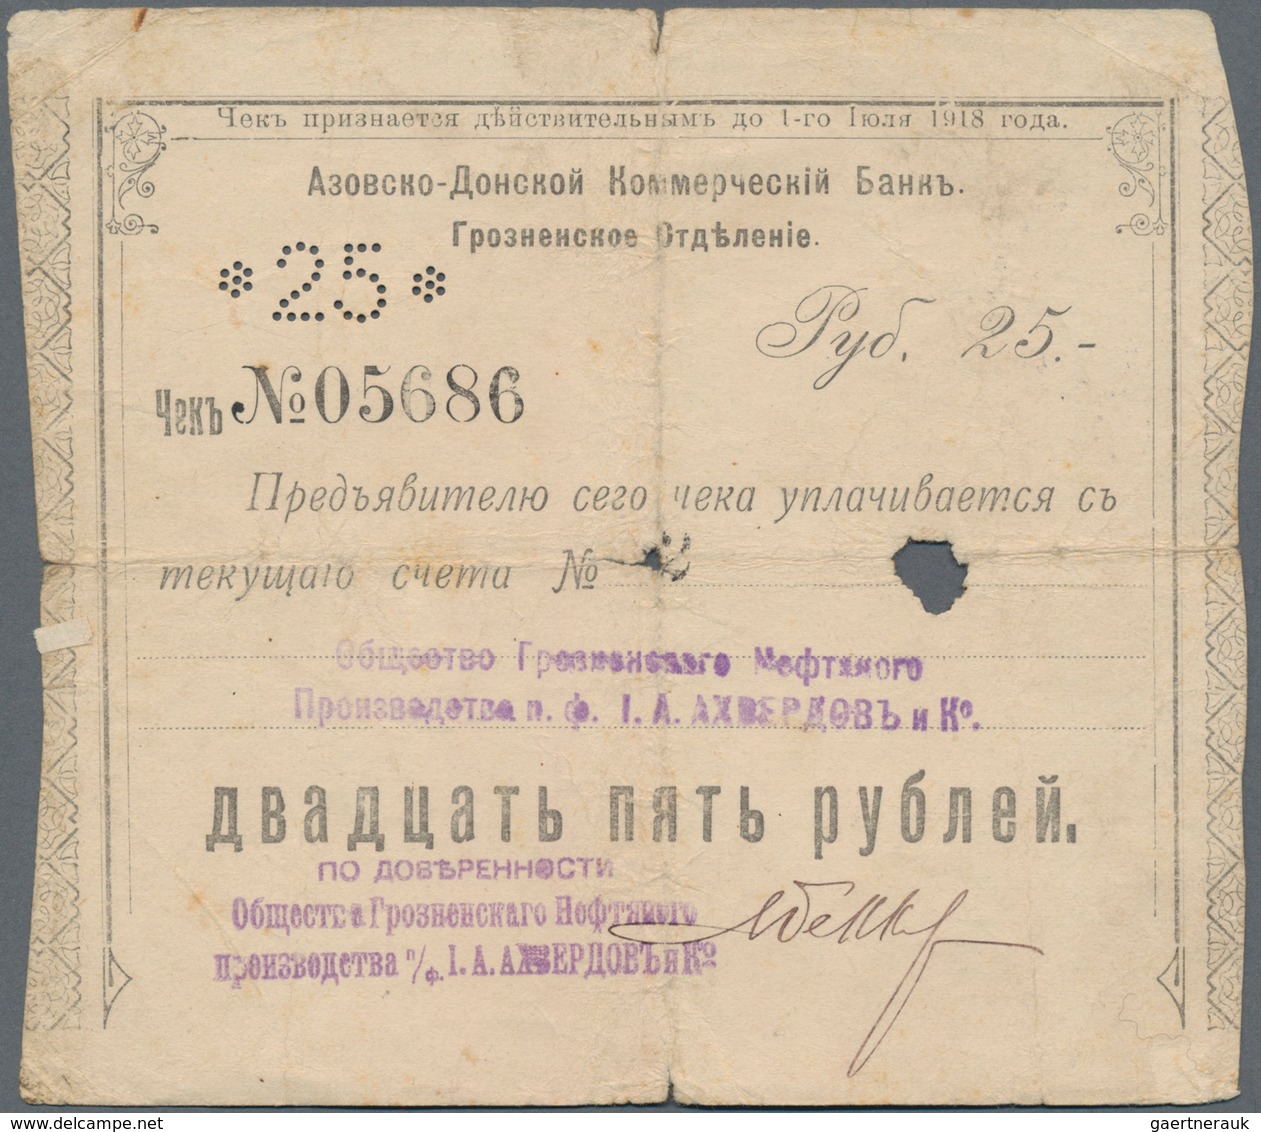 Russia / Russland: North Caucasus – Grozny 25 Rubles 1918, P.S583, Still Nice With A Few Small Borde - Russia